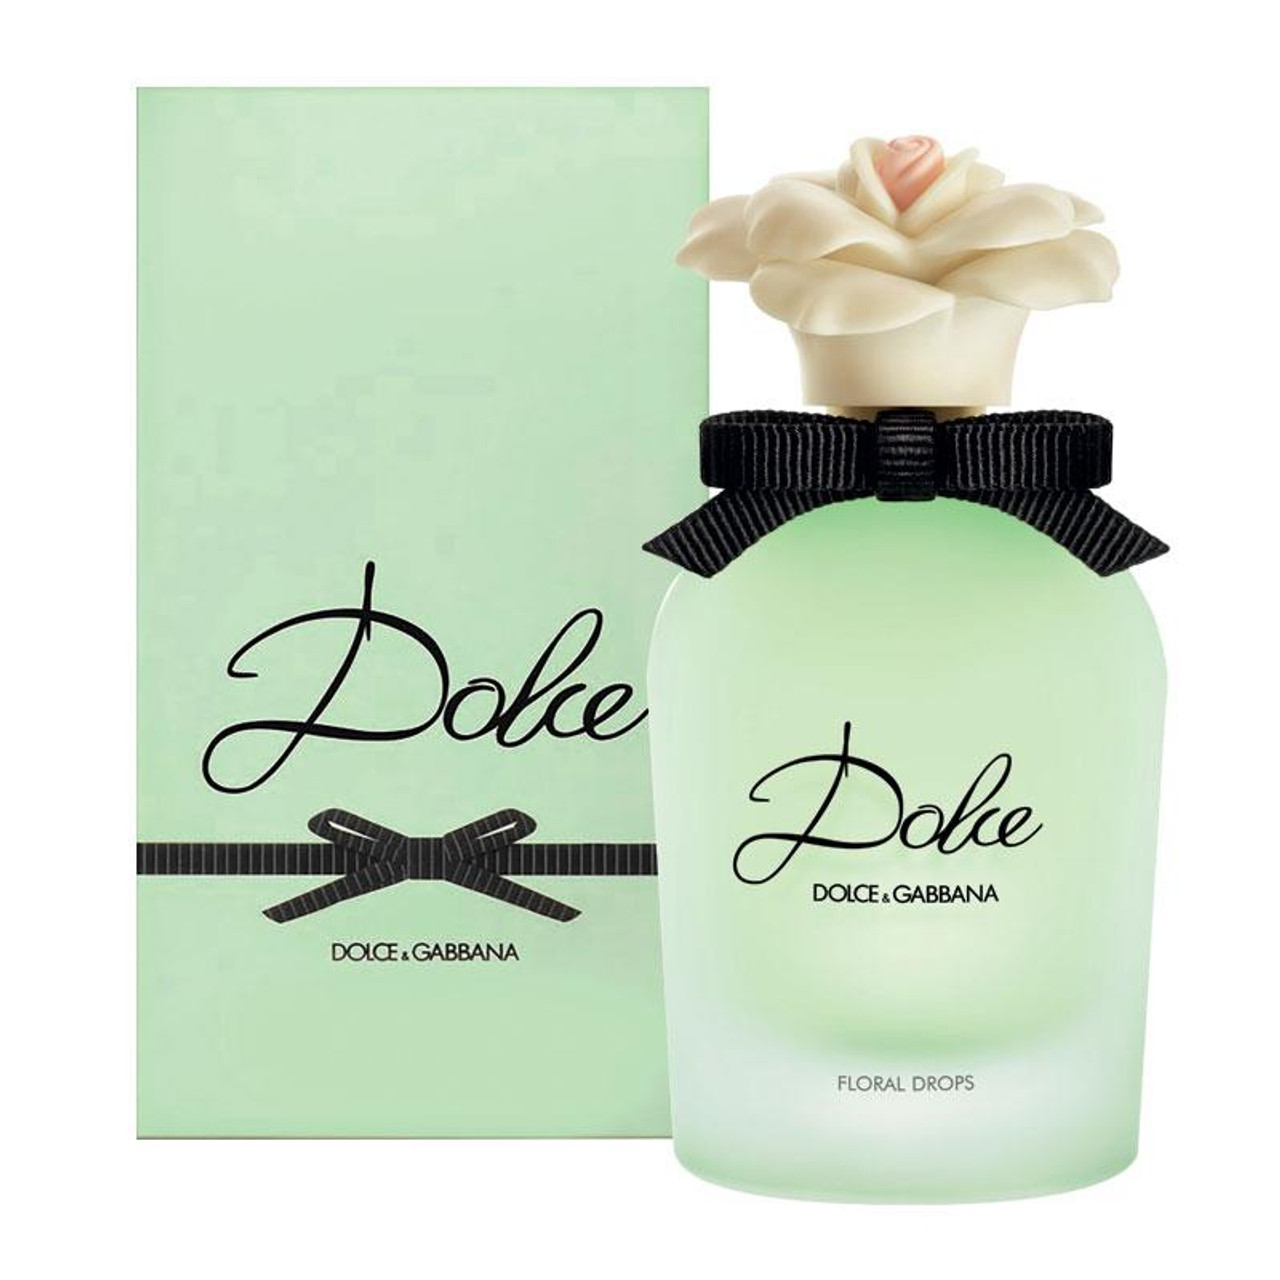 Dolce Gabbana Dolce Floral Drops 50ml